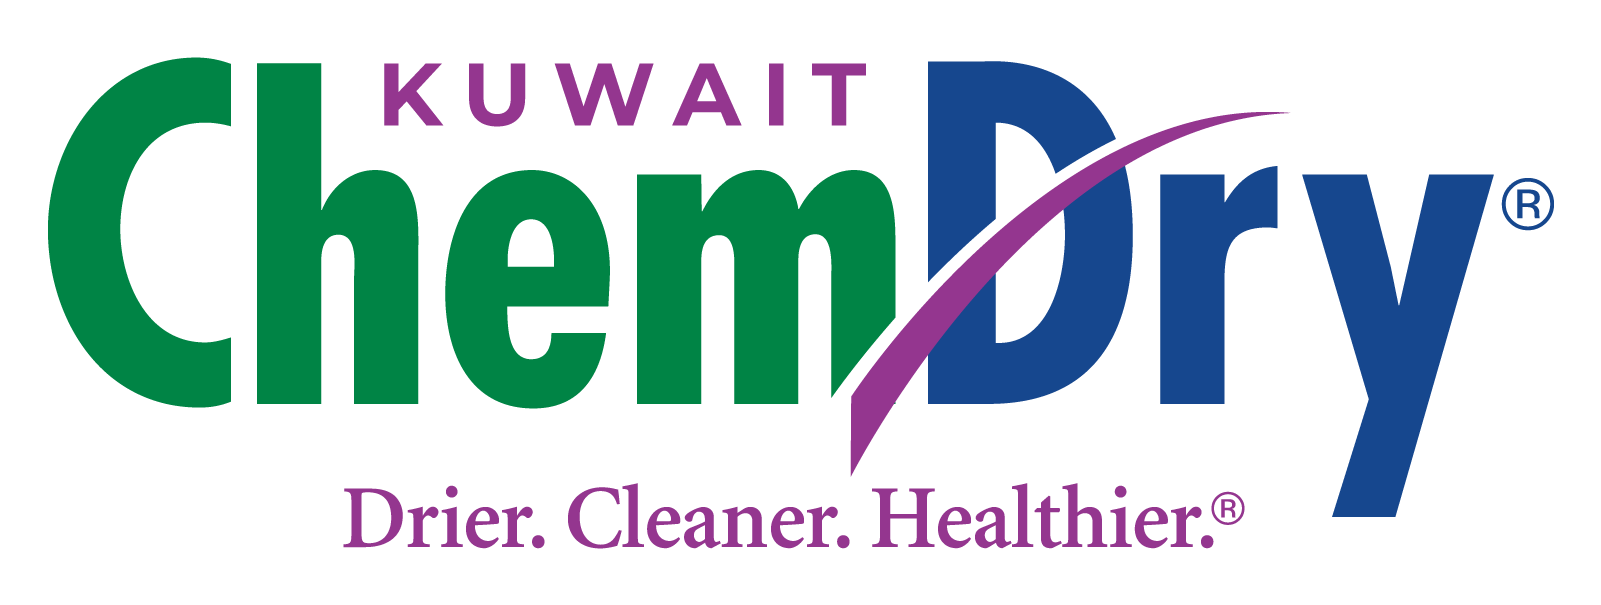 Chemdry Logo, Kuwait, Carpet Cleaning, Drier, Healthier, Cleaner